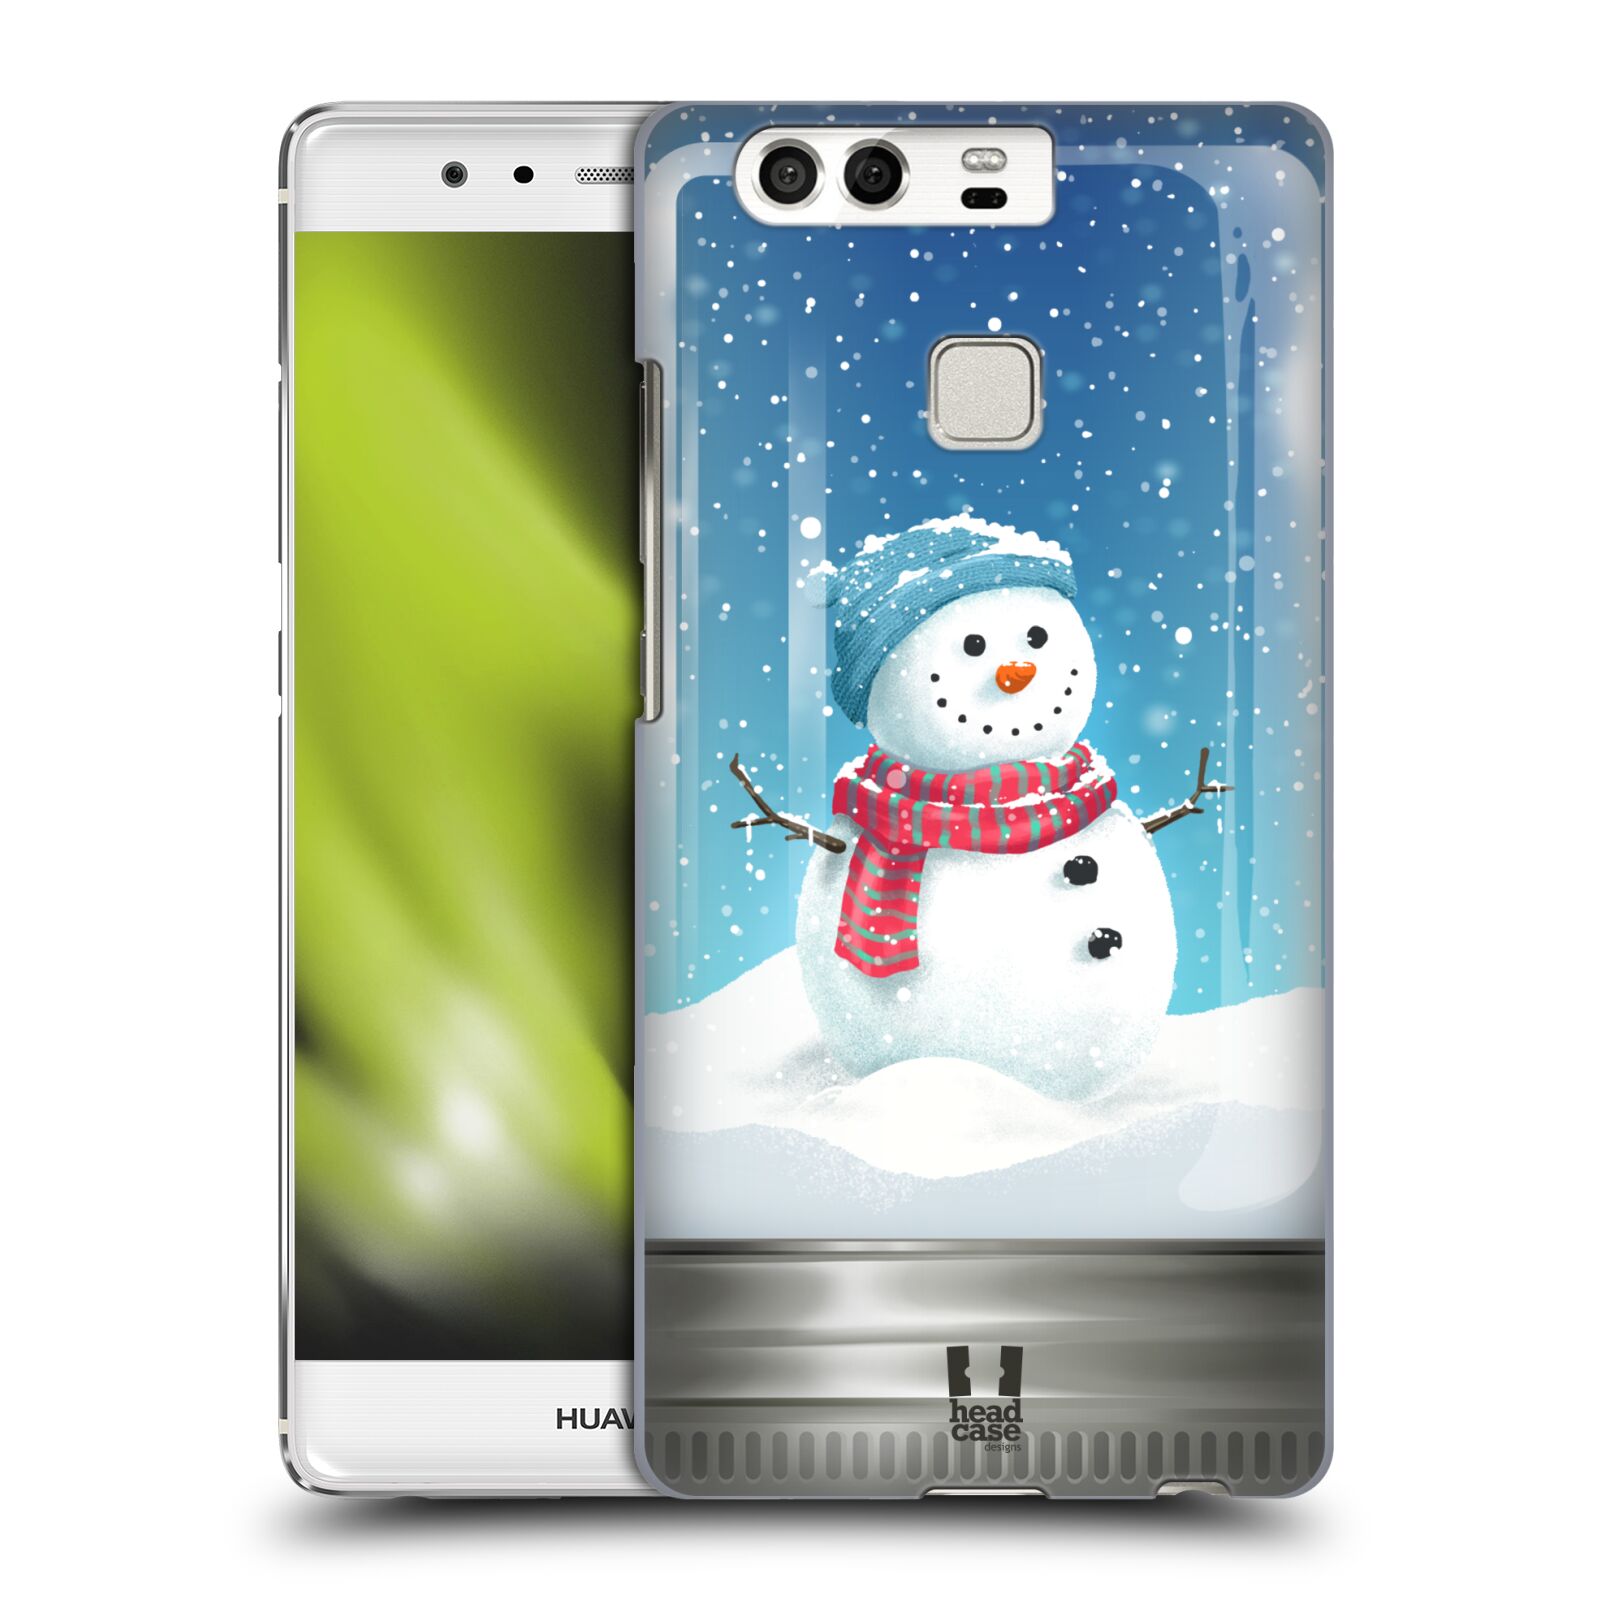 HEAD CASE plastový obal na mobil Huawei P9 / P9 DUAL SIM vzor Vánoce v těžítku SNĚHULÁK